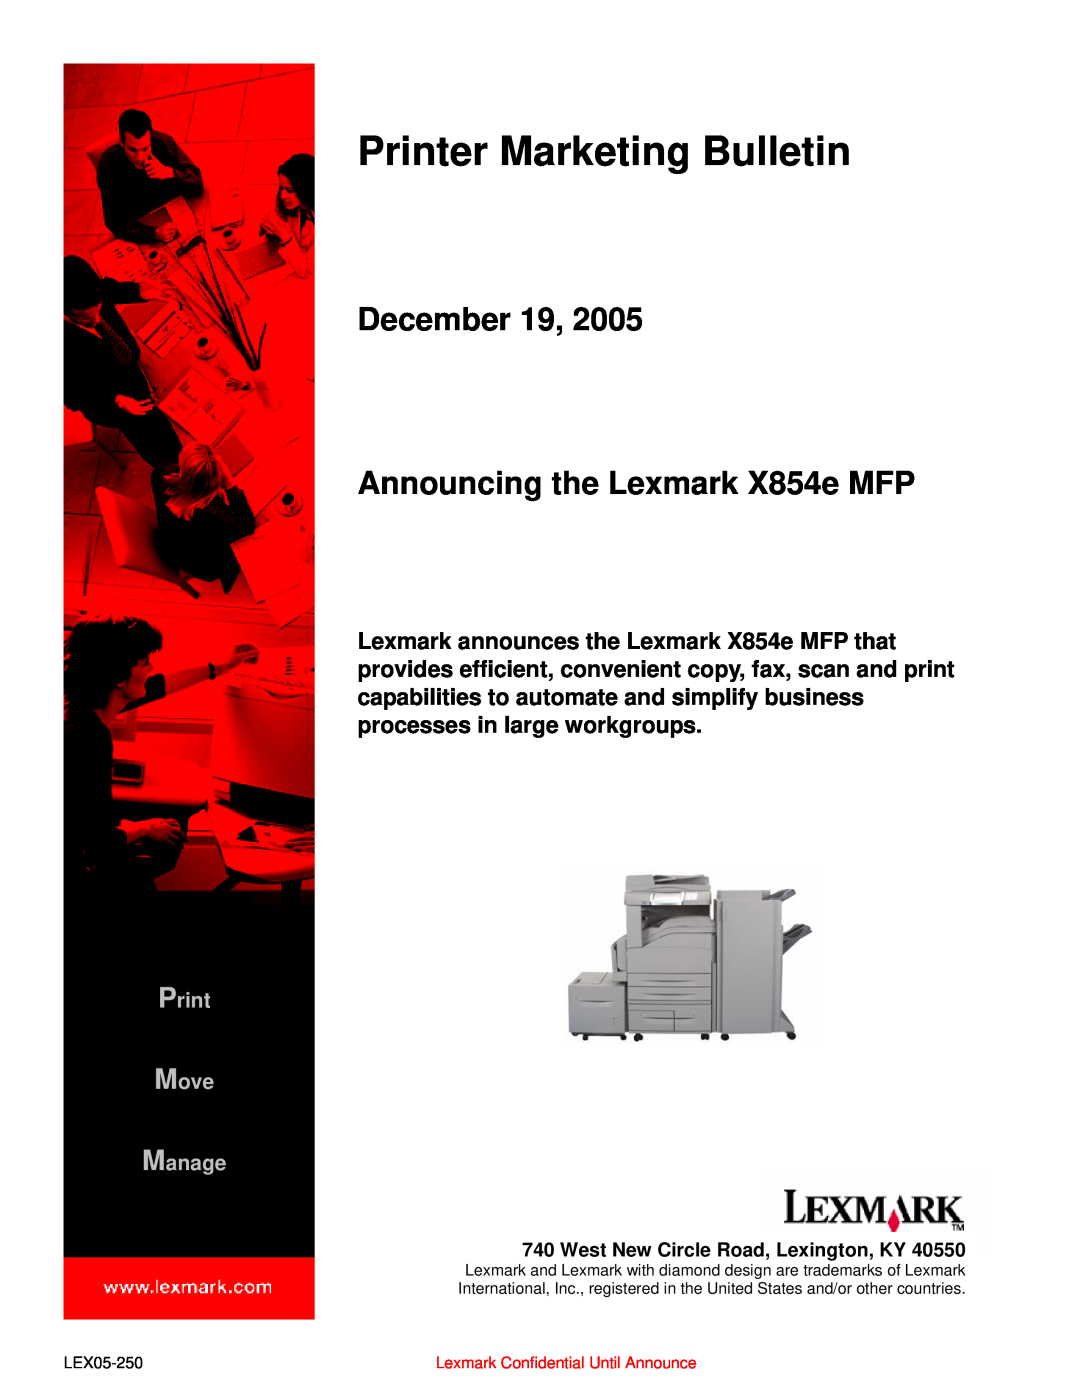 Lexmark 854e MFP manual West New Circle Road, Lexington, KY, Printer Marketing Bulletin, Print Move Manage, LEX05-250 